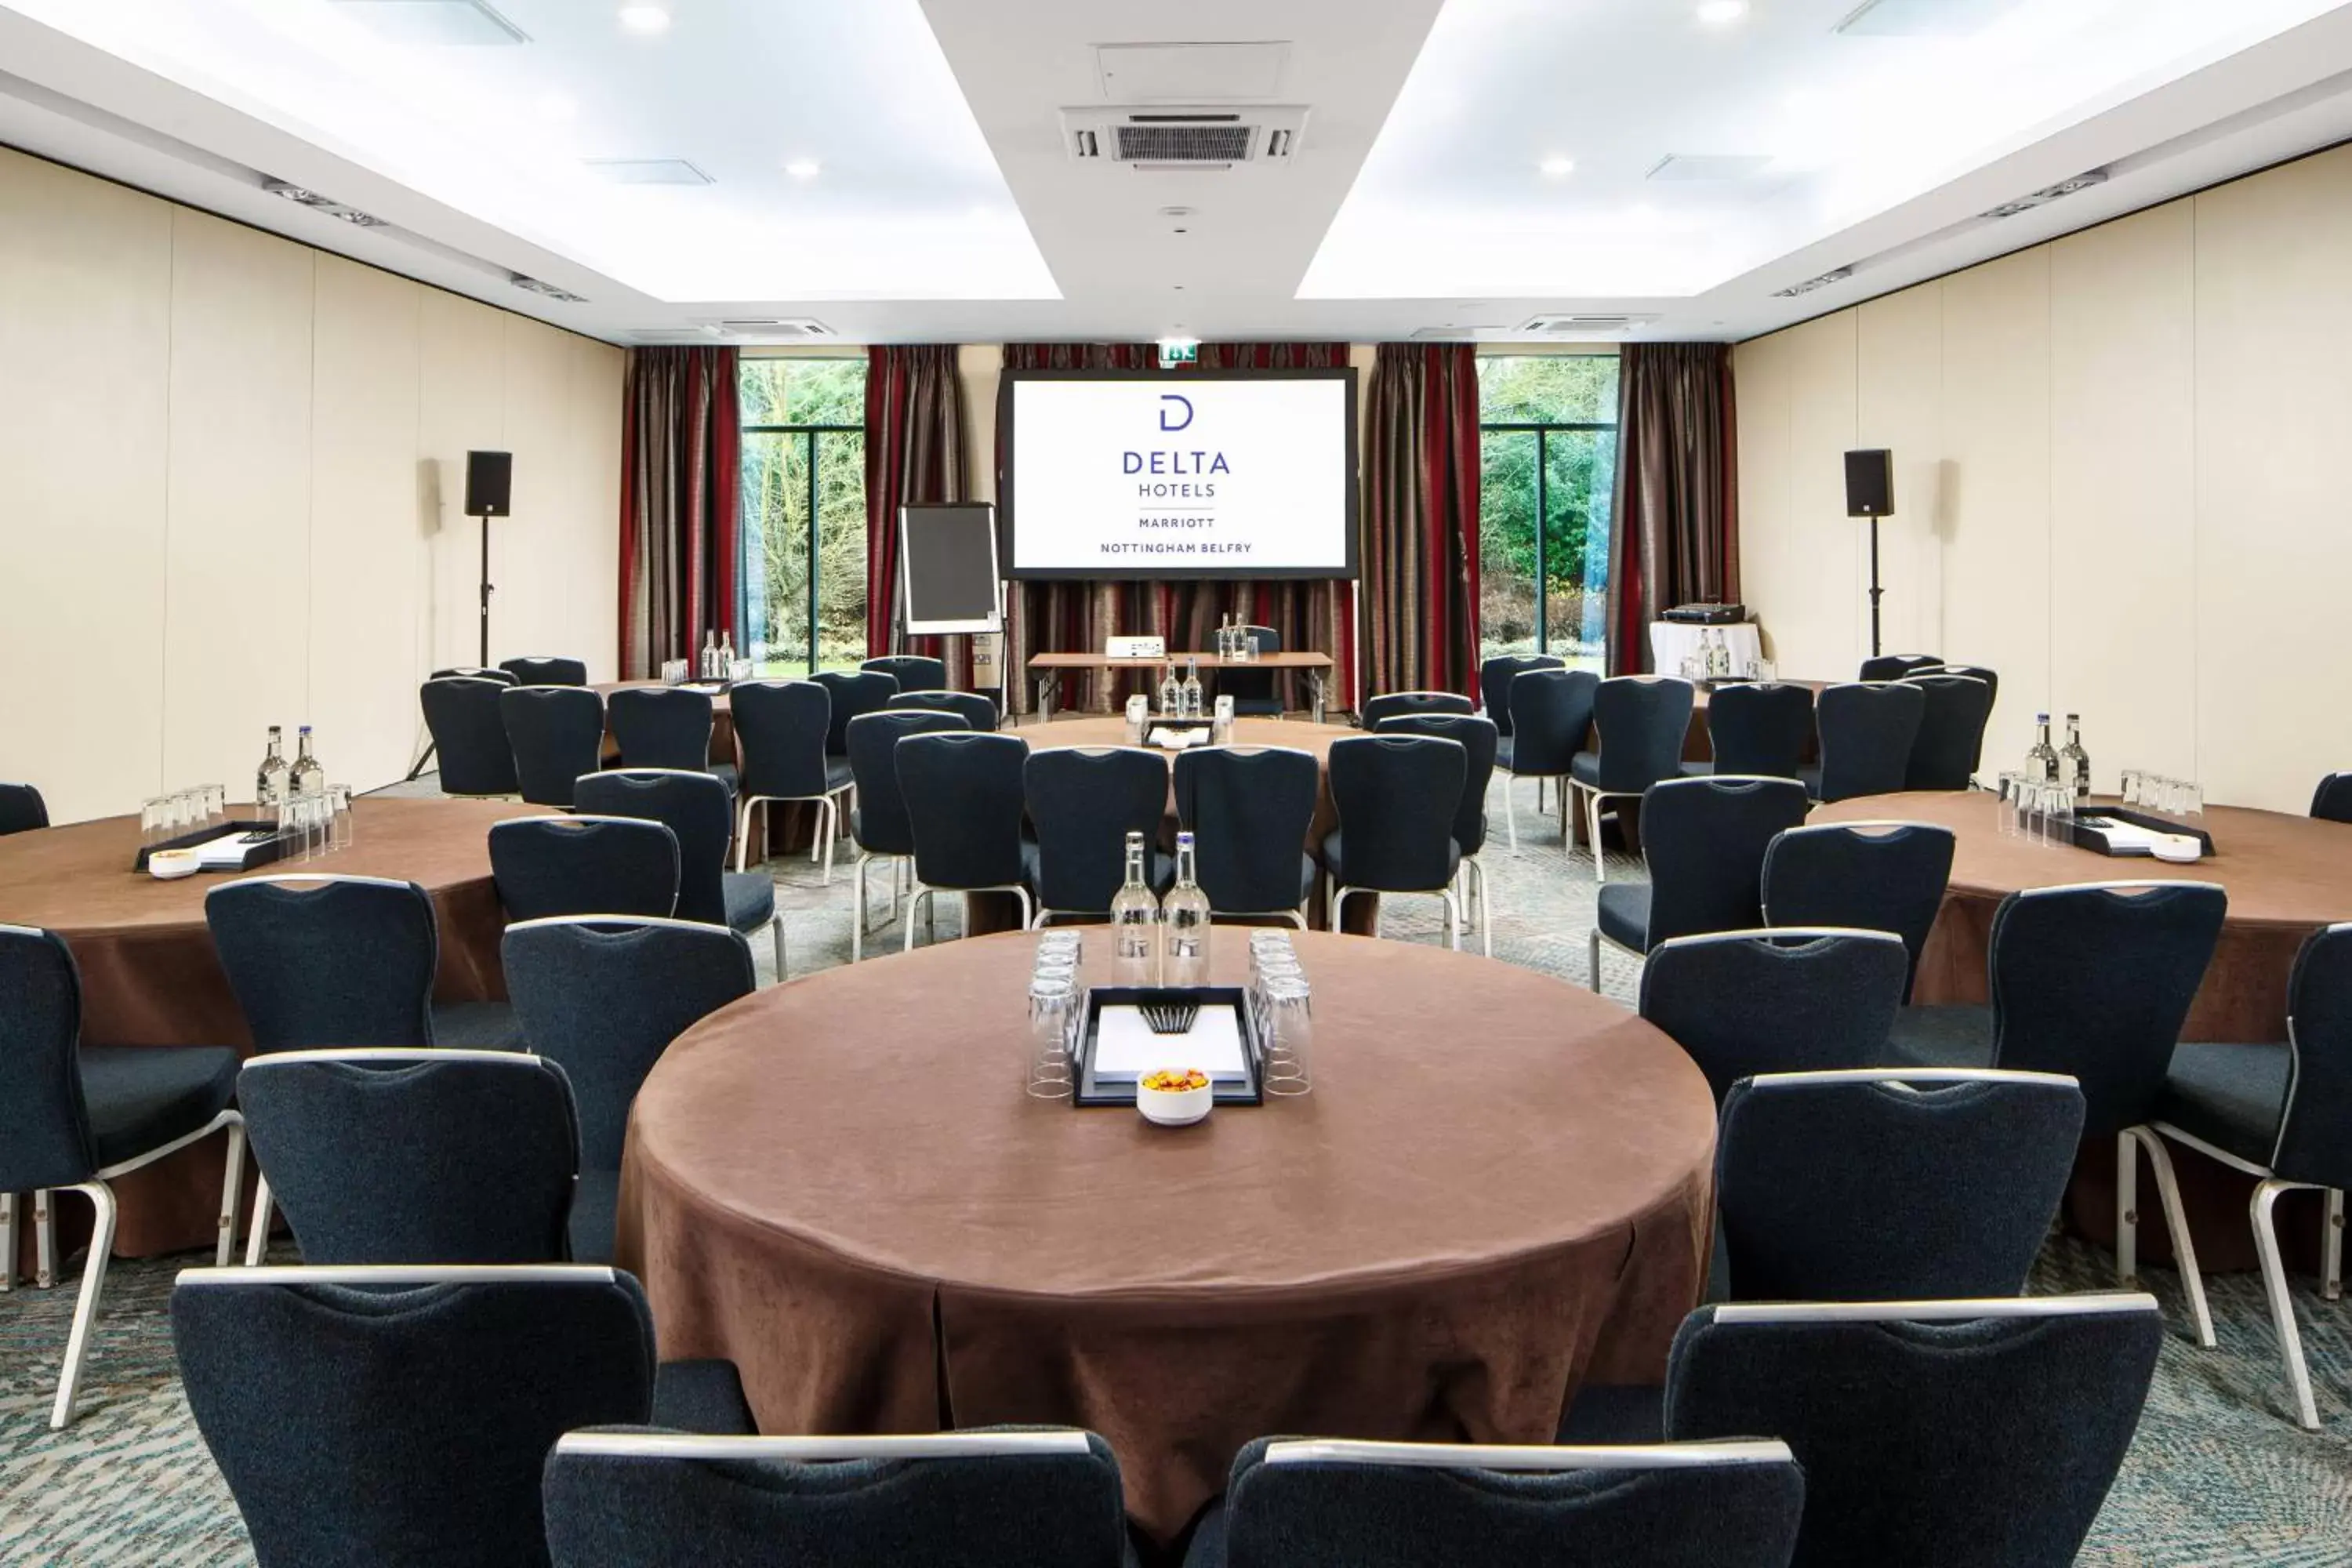 Meeting/conference room in Delta Hotels Nottingham Belfry